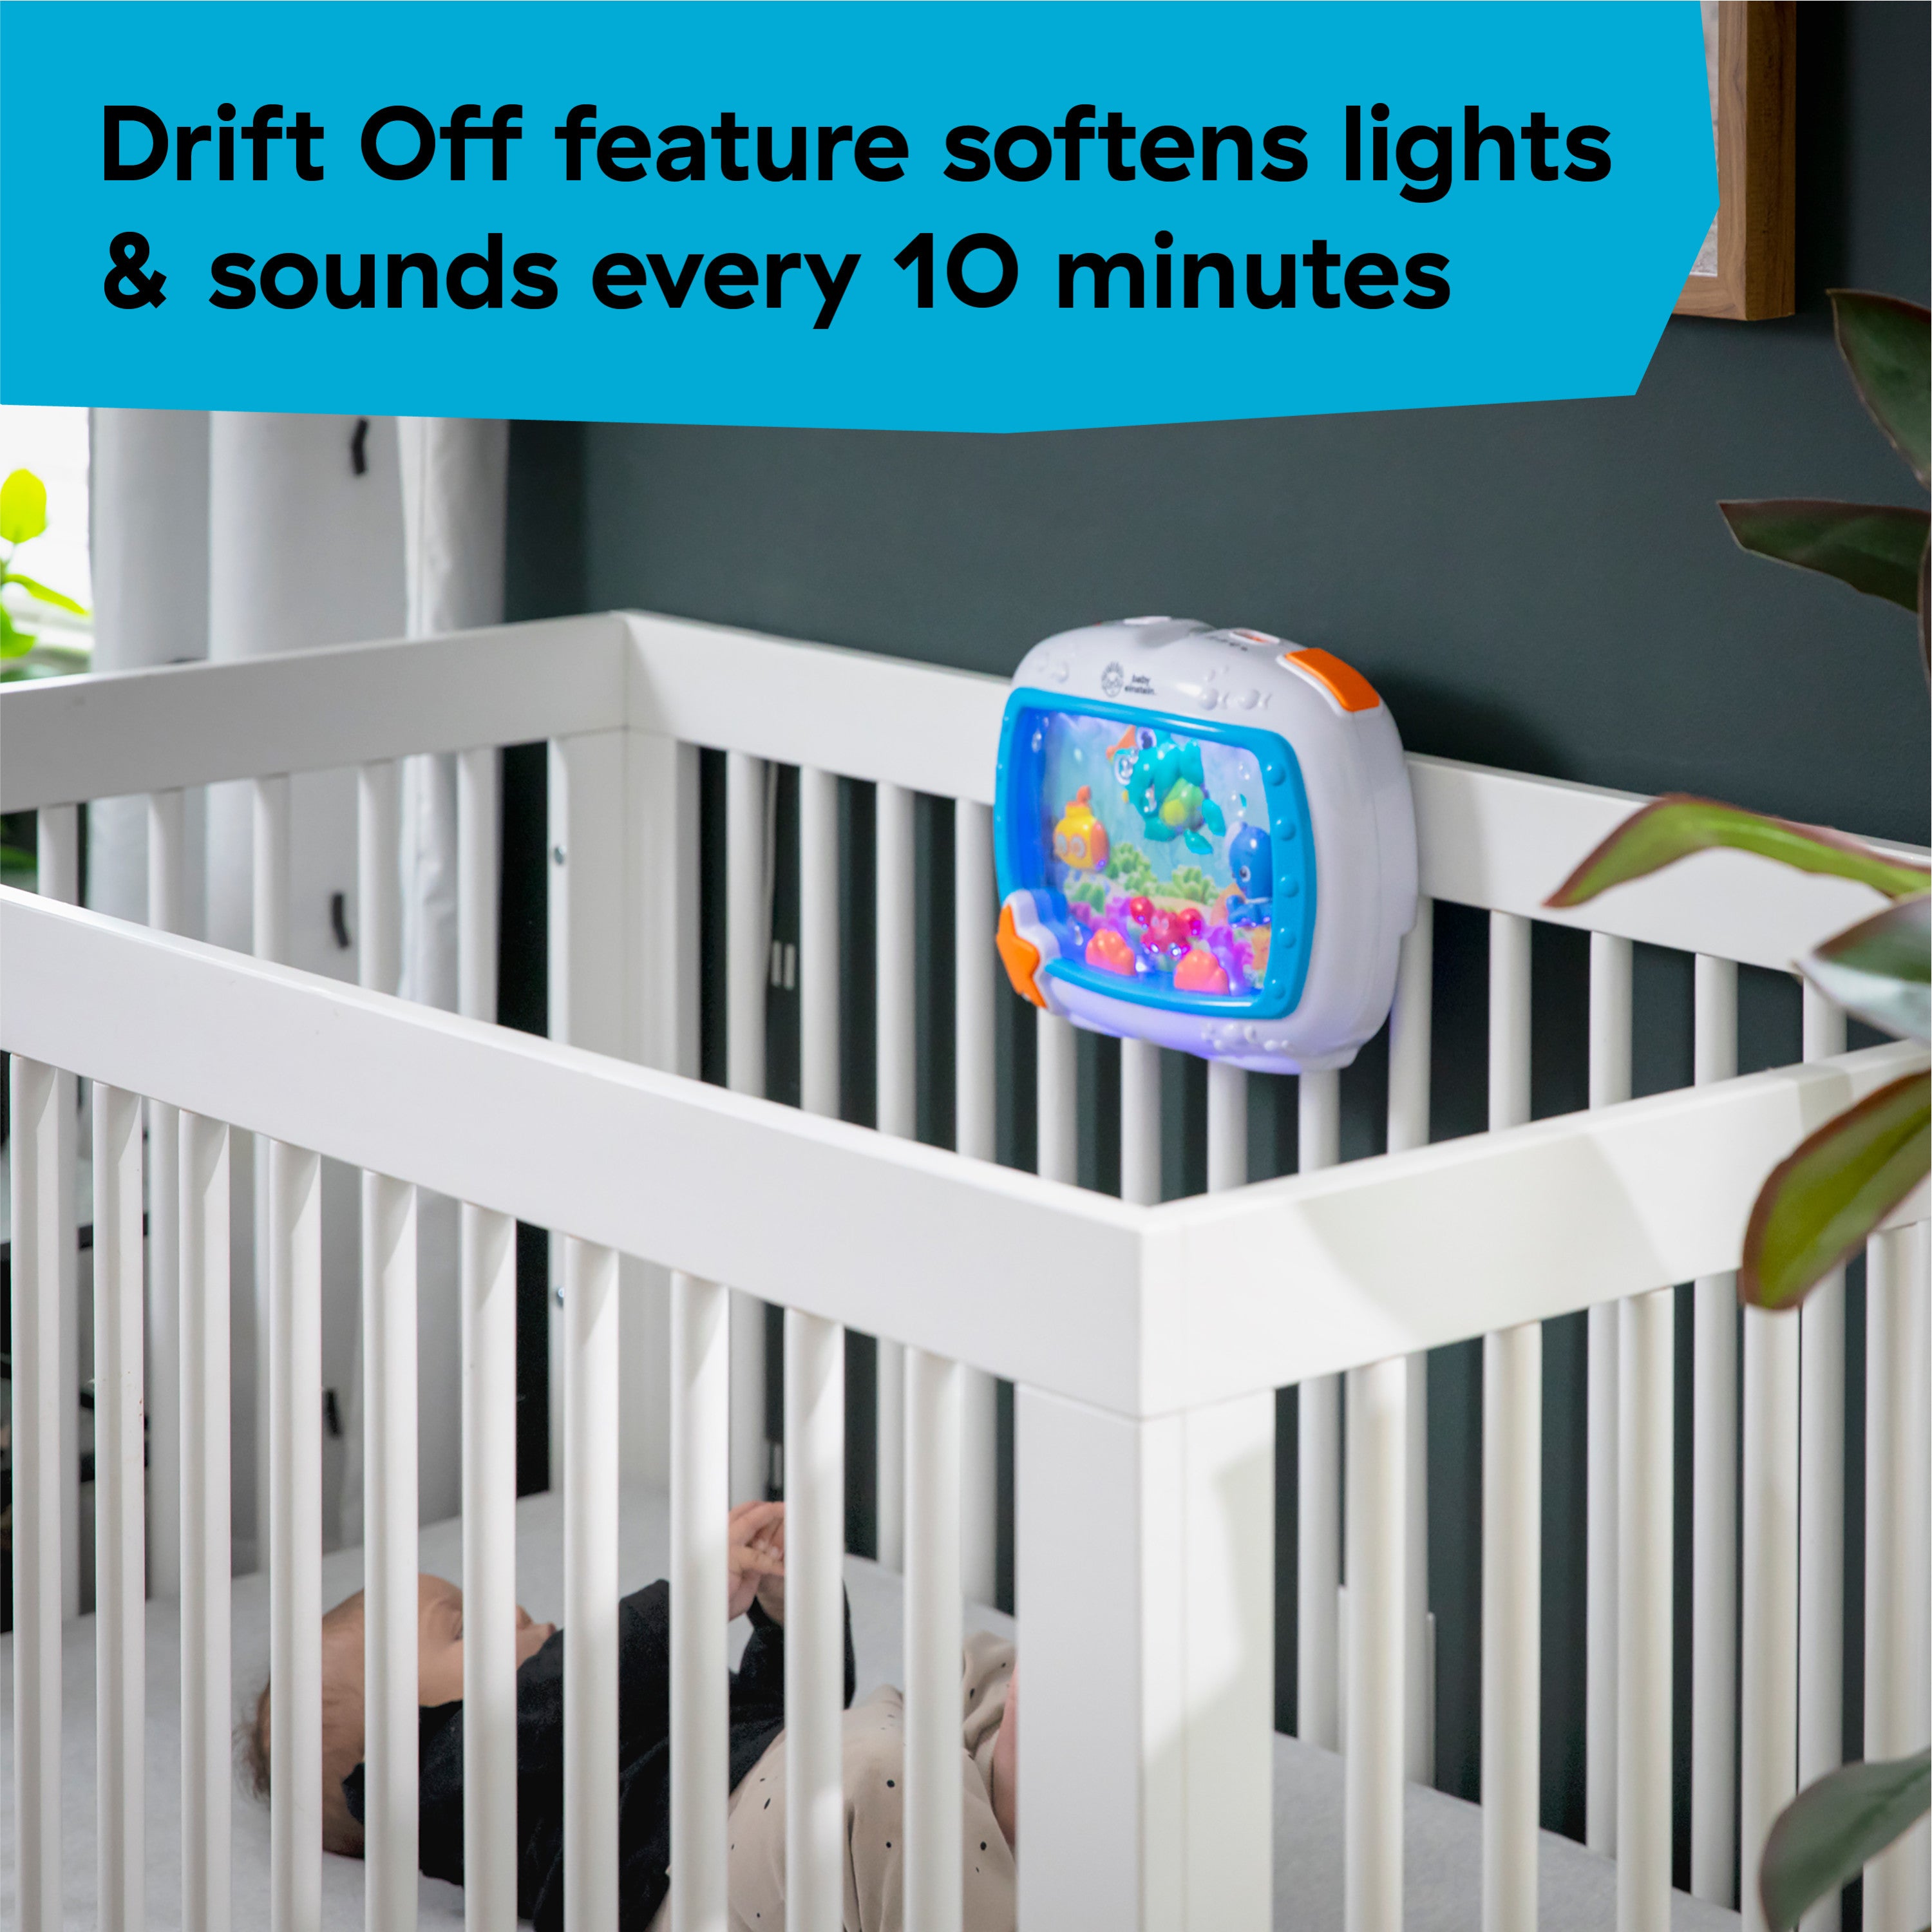 5 Sleep-Friendly Crib Toys For Babies